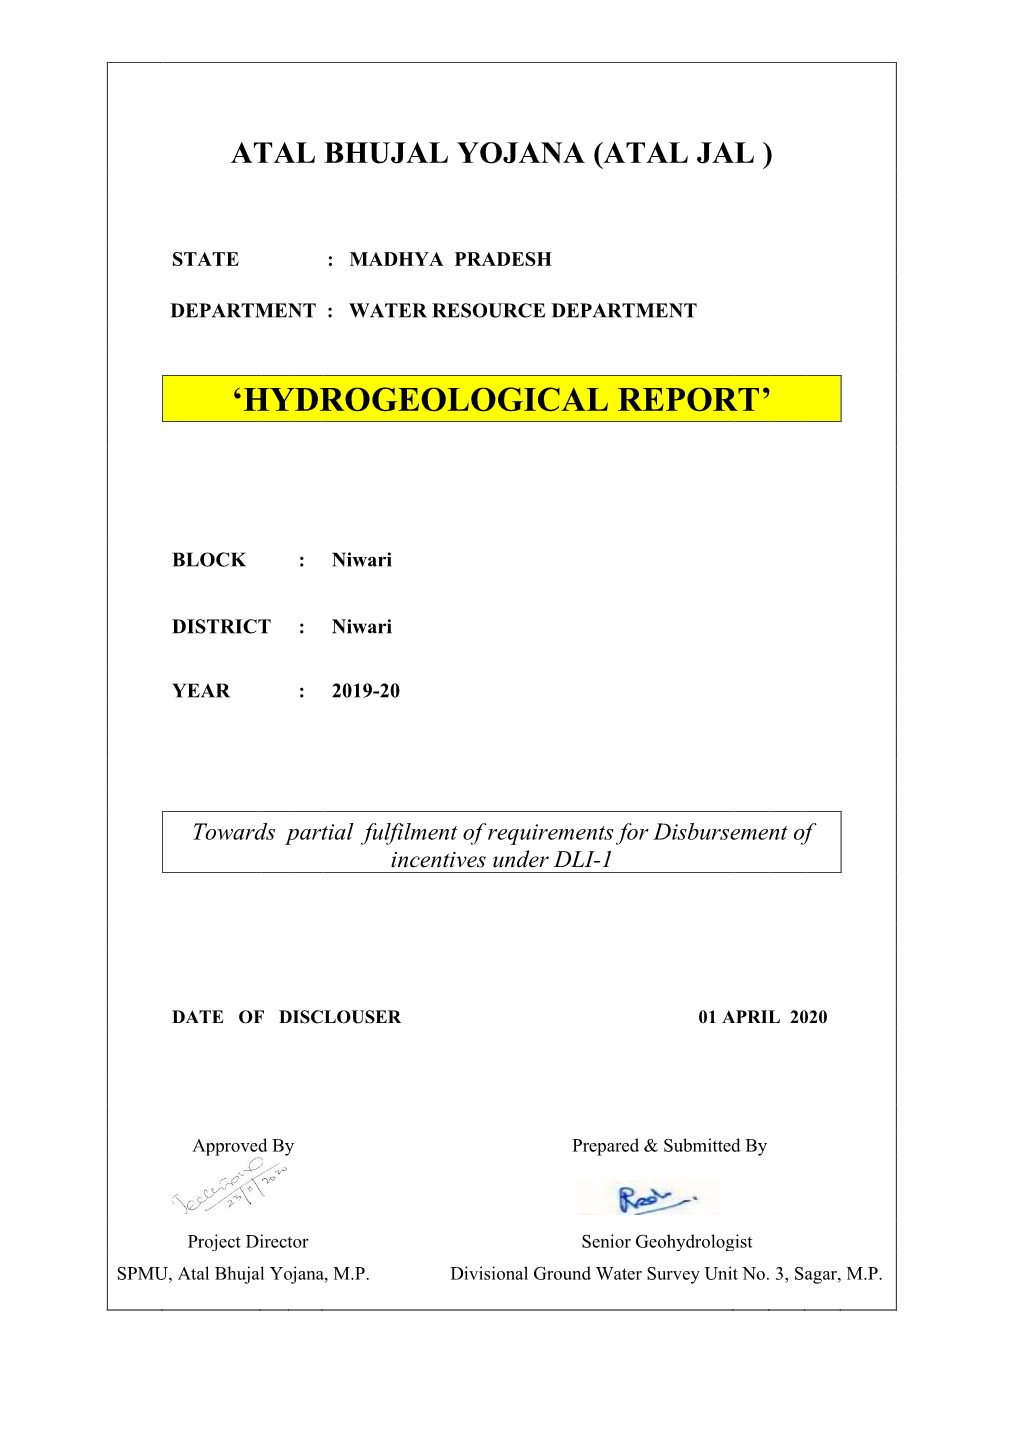 'Hydrogeological Report'